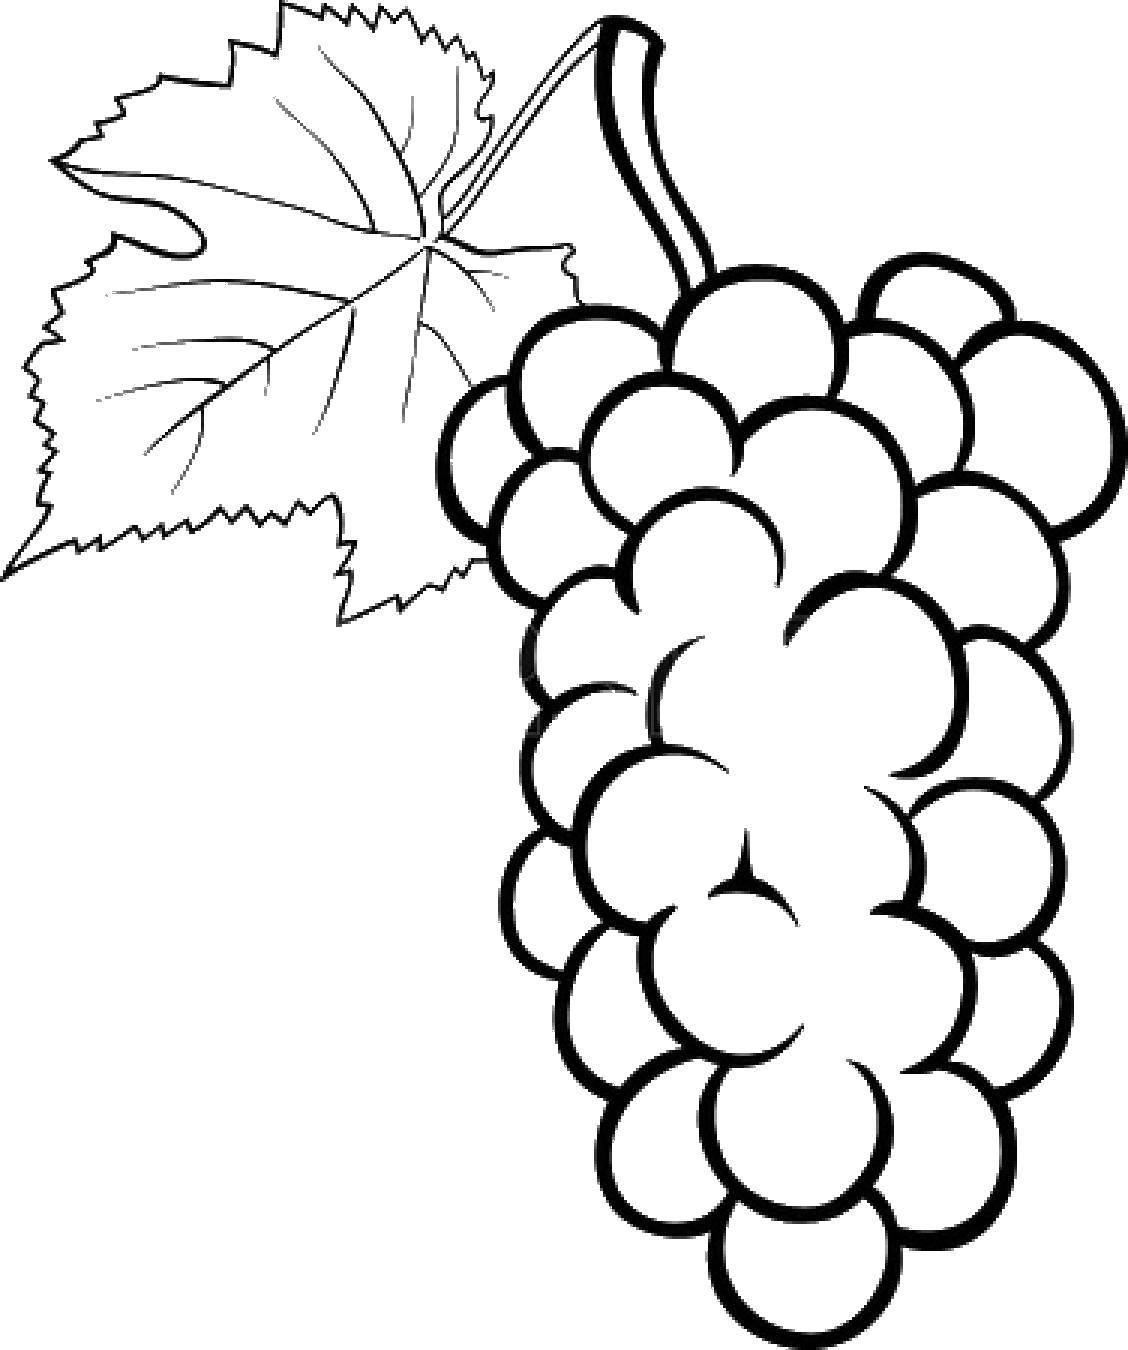  Виноград